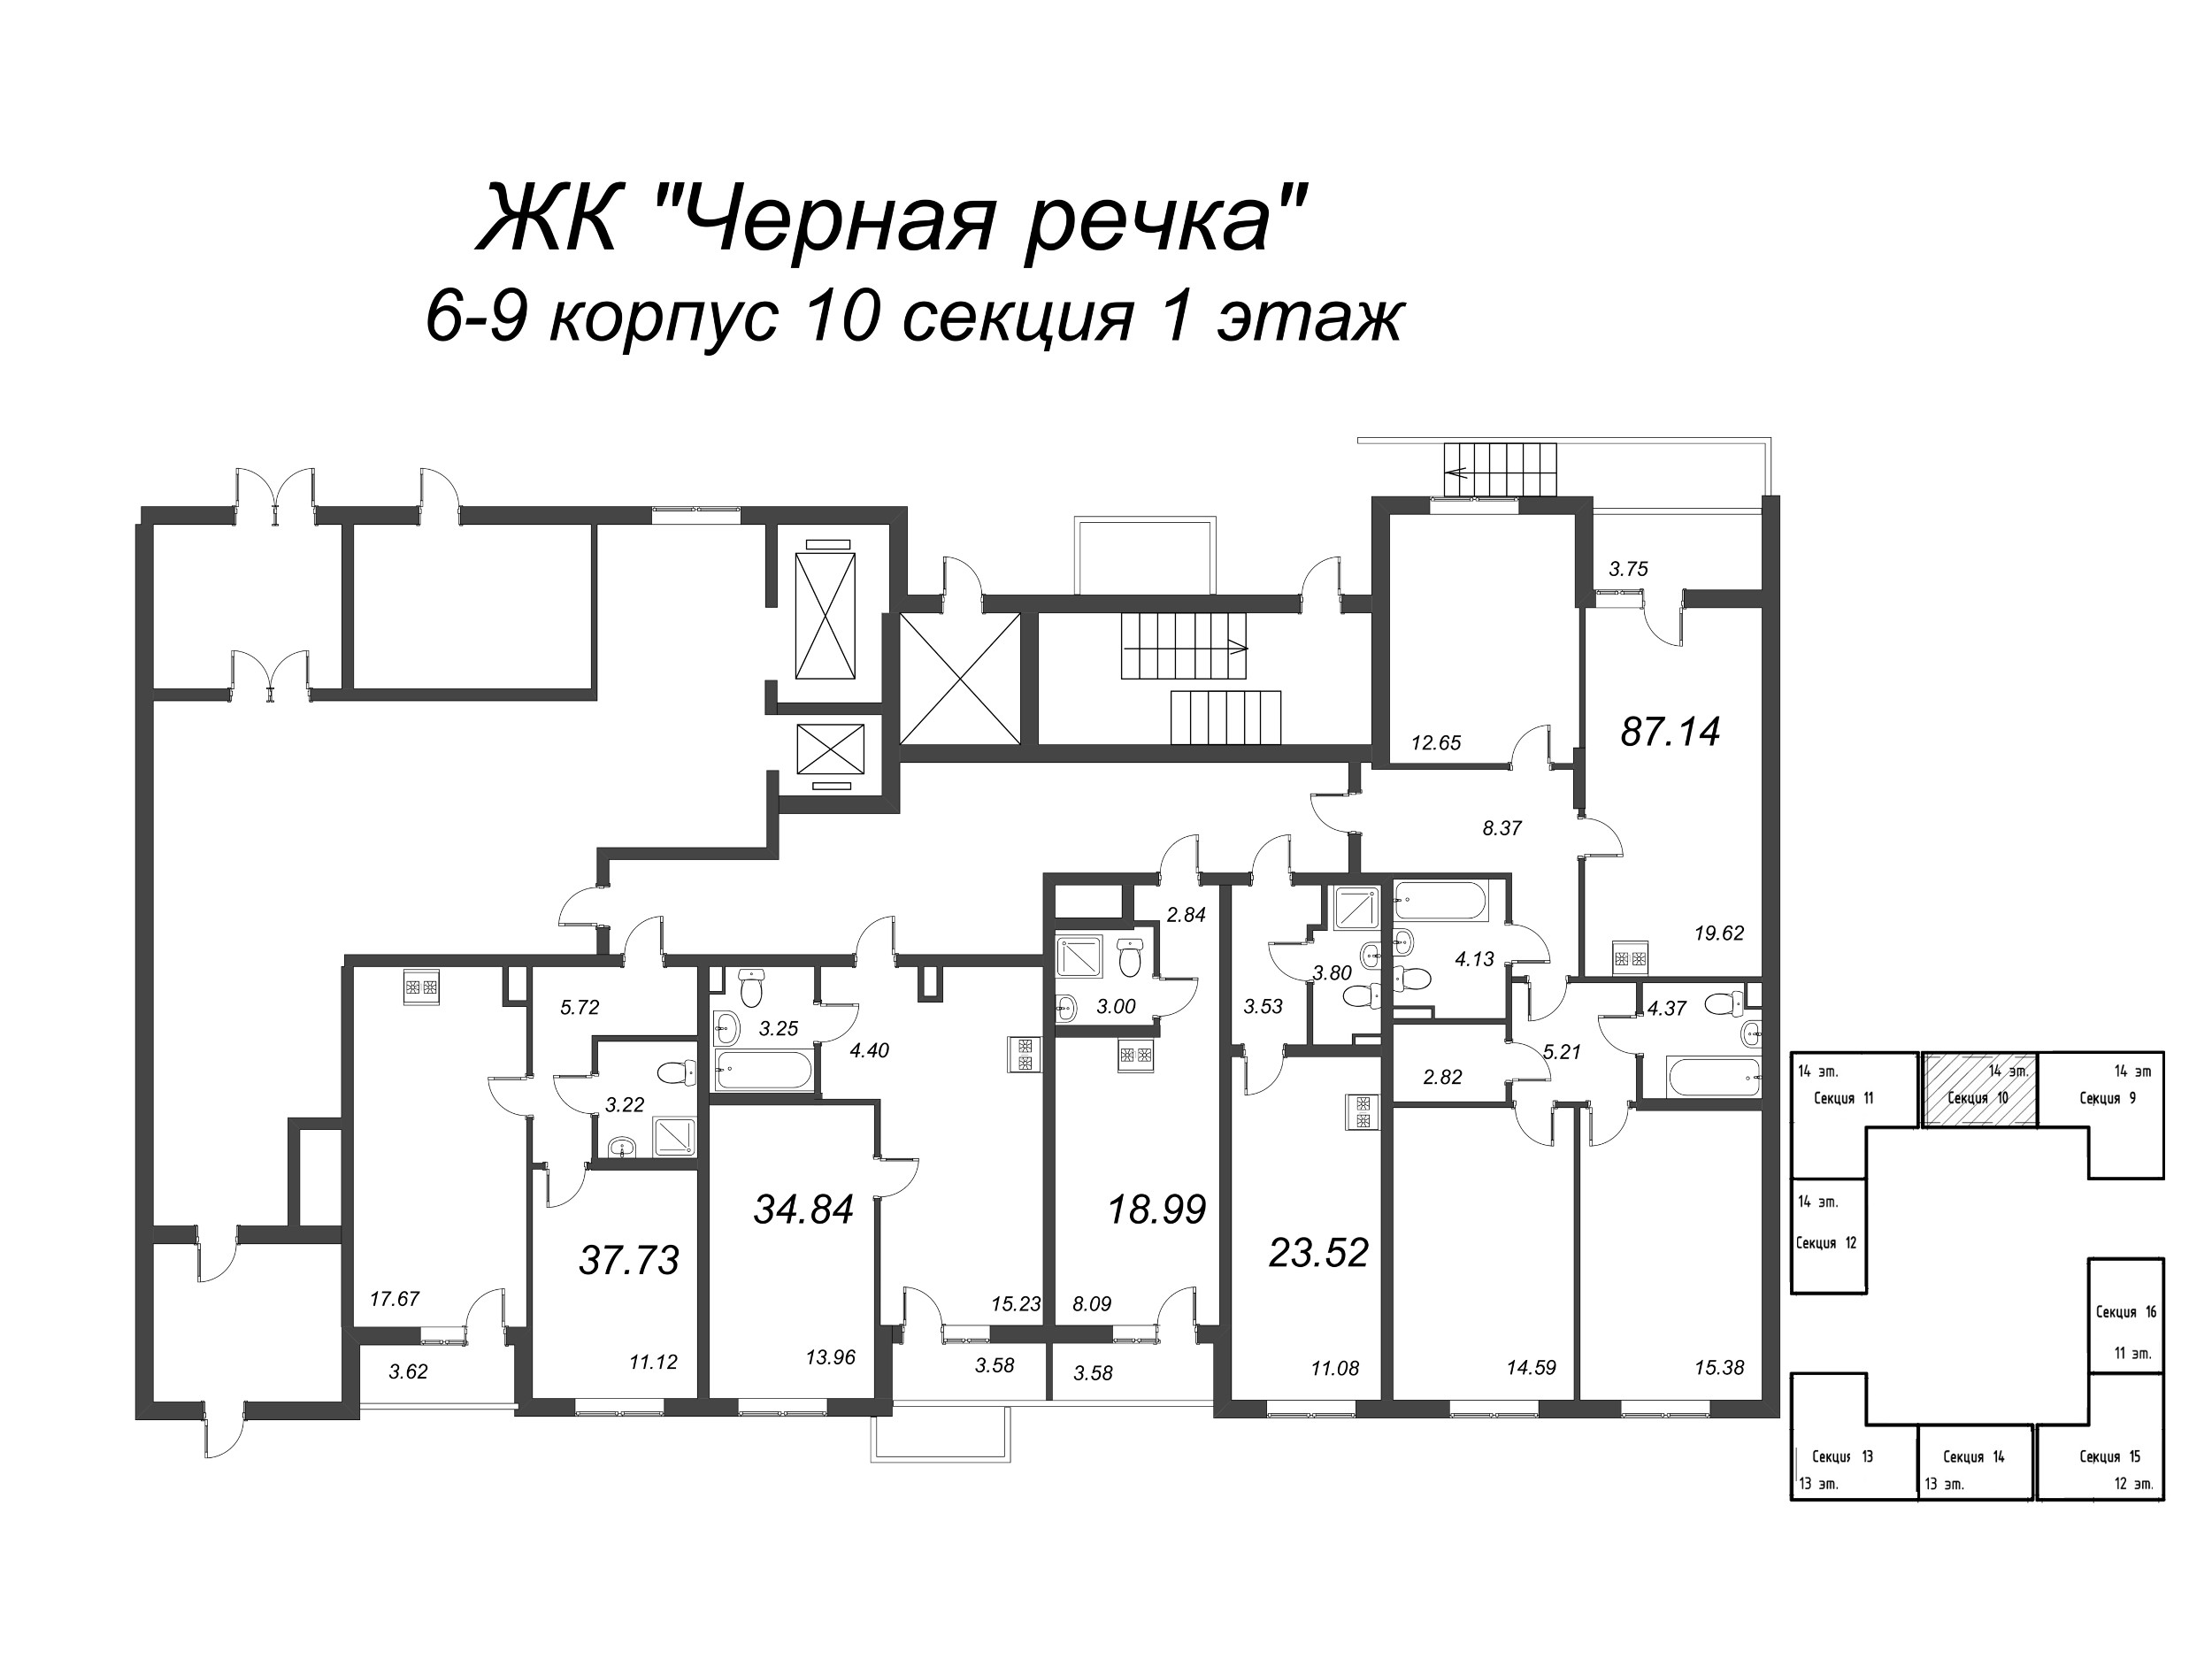 4-комнатная (Евро) квартира, 87.14 м² - планировка этажа